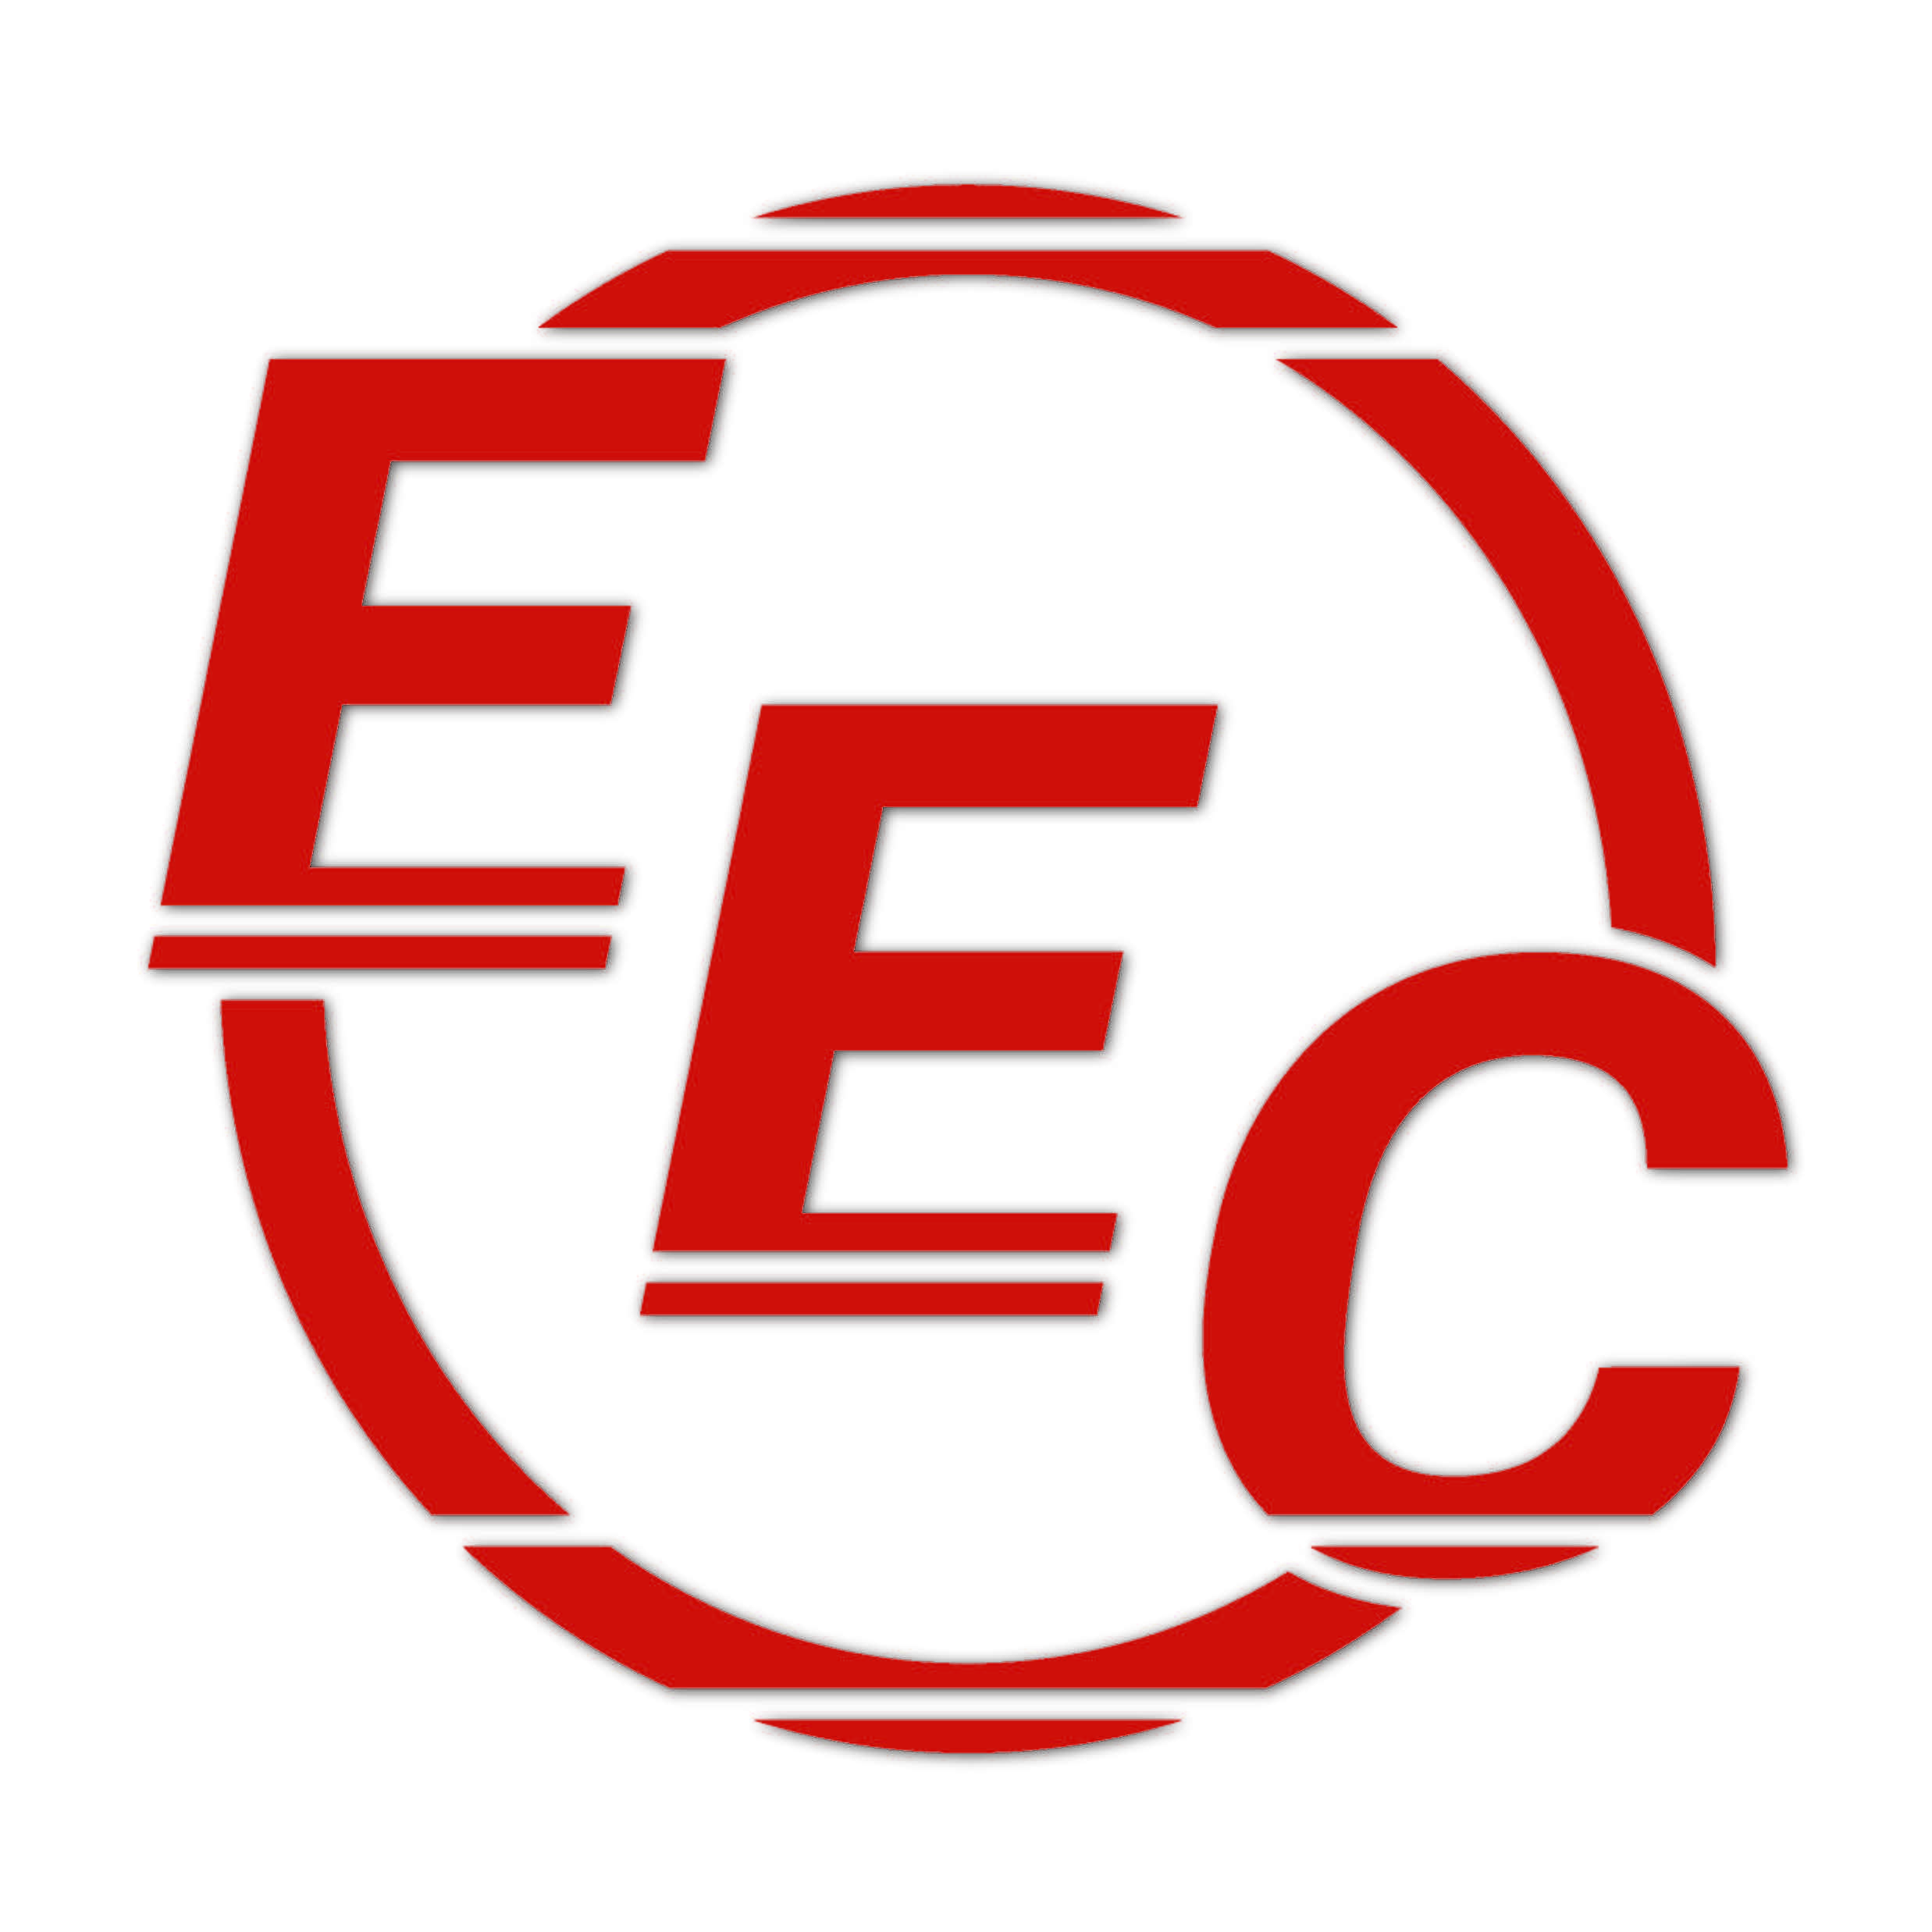 EEC Logo - File:EEC - Final.jpg - Wikimedia Commons